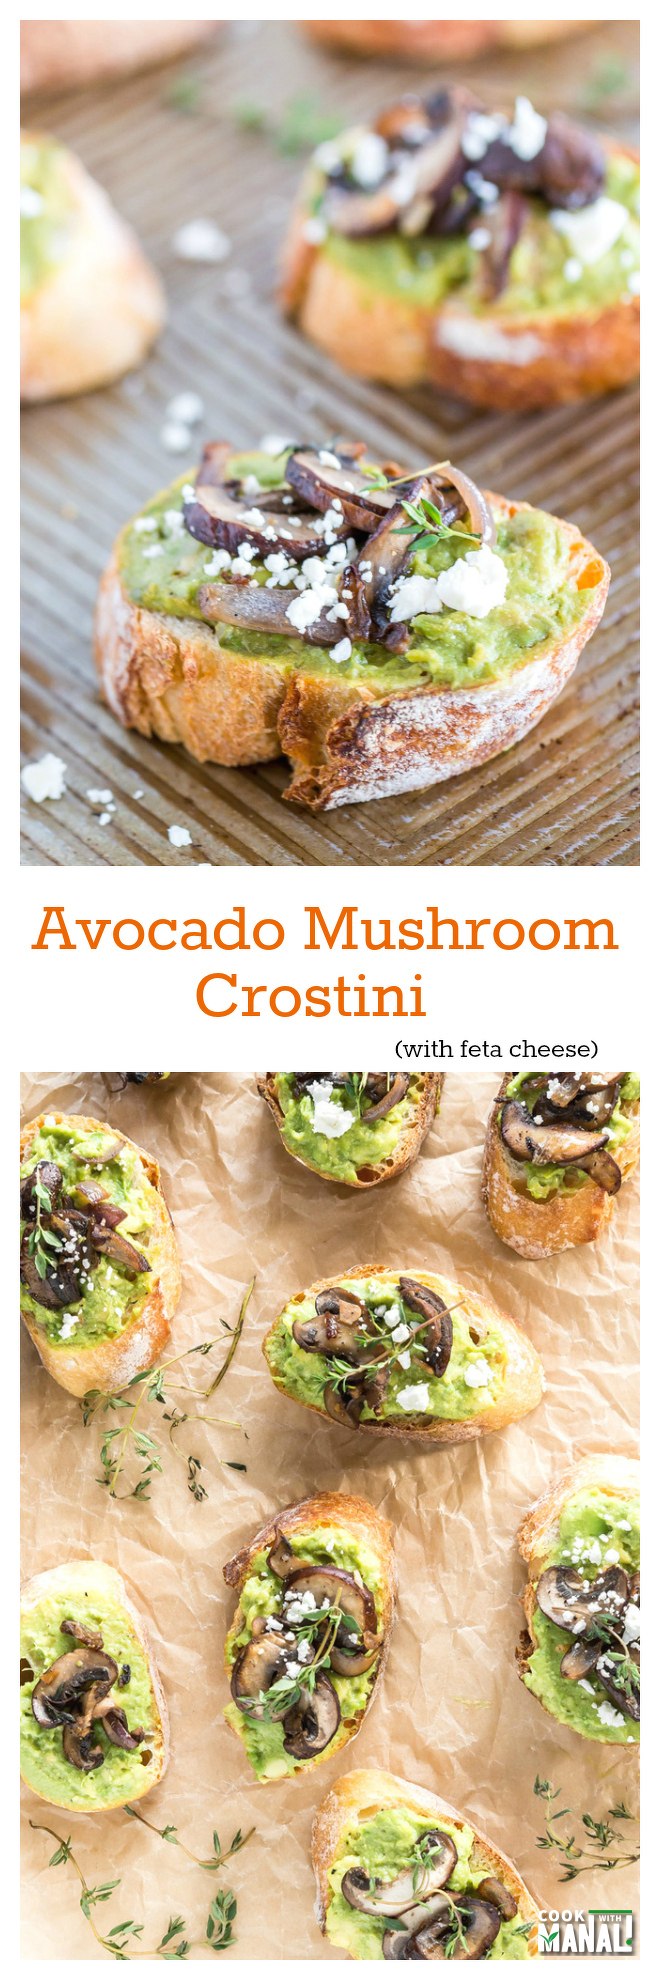 Avocado Mushroom Crostini Collage